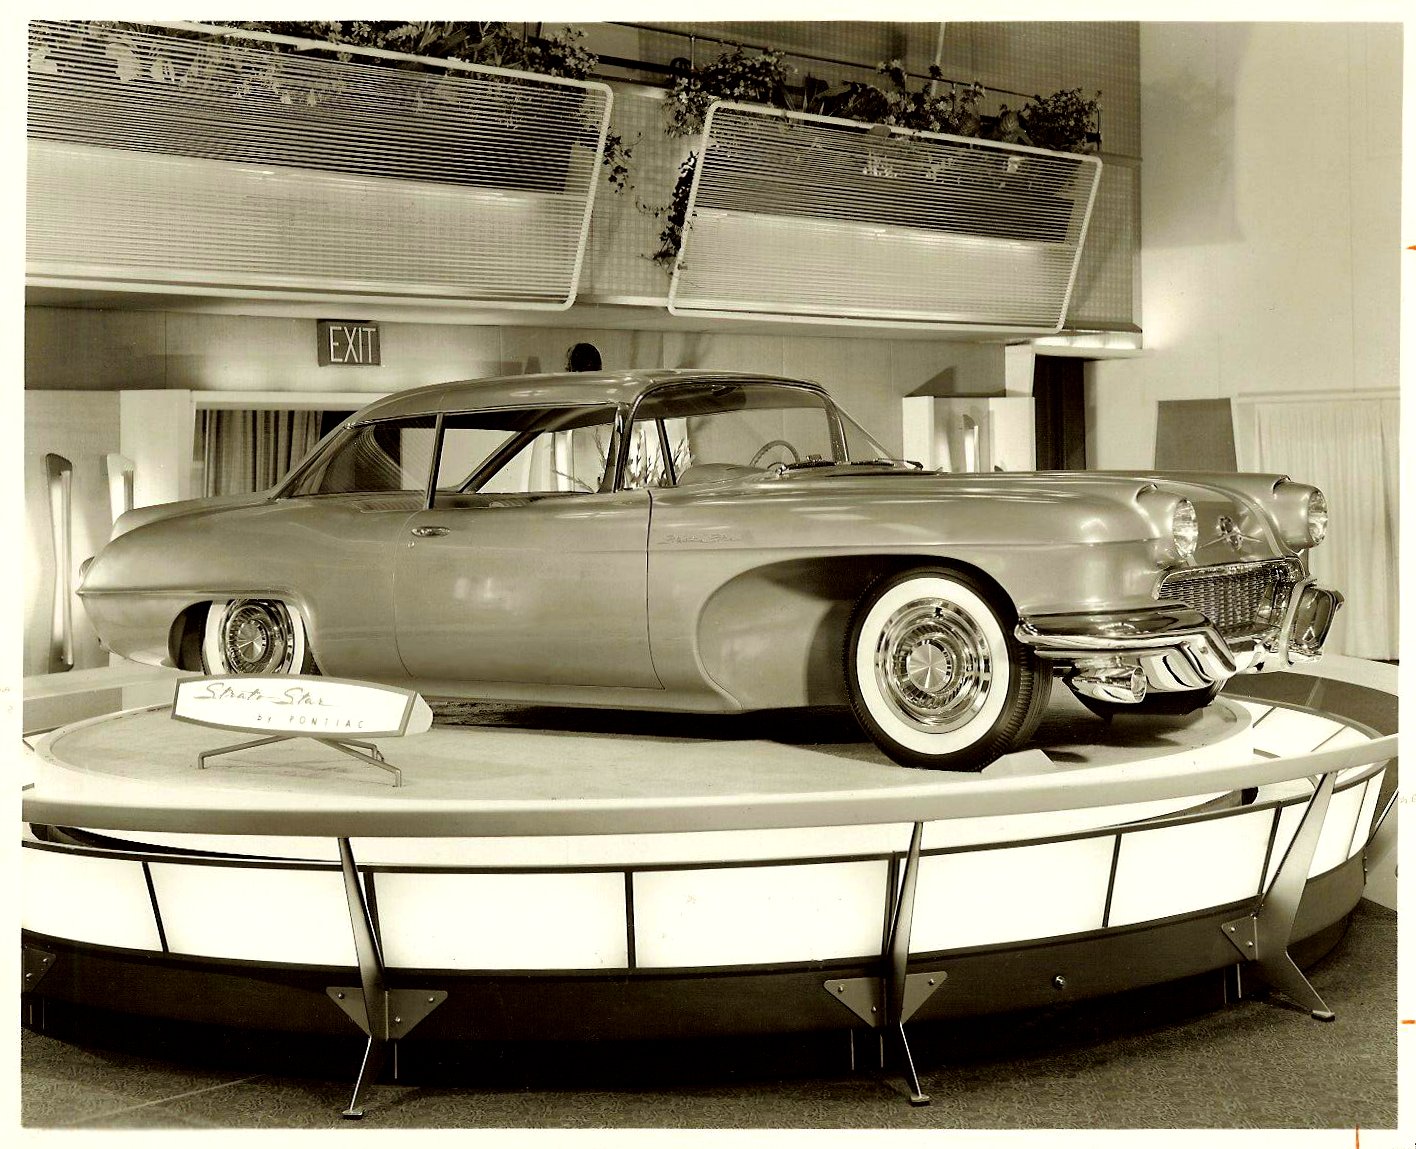 Pontiac Strato-Star, 1955 - on display at the Waldorf Astoria